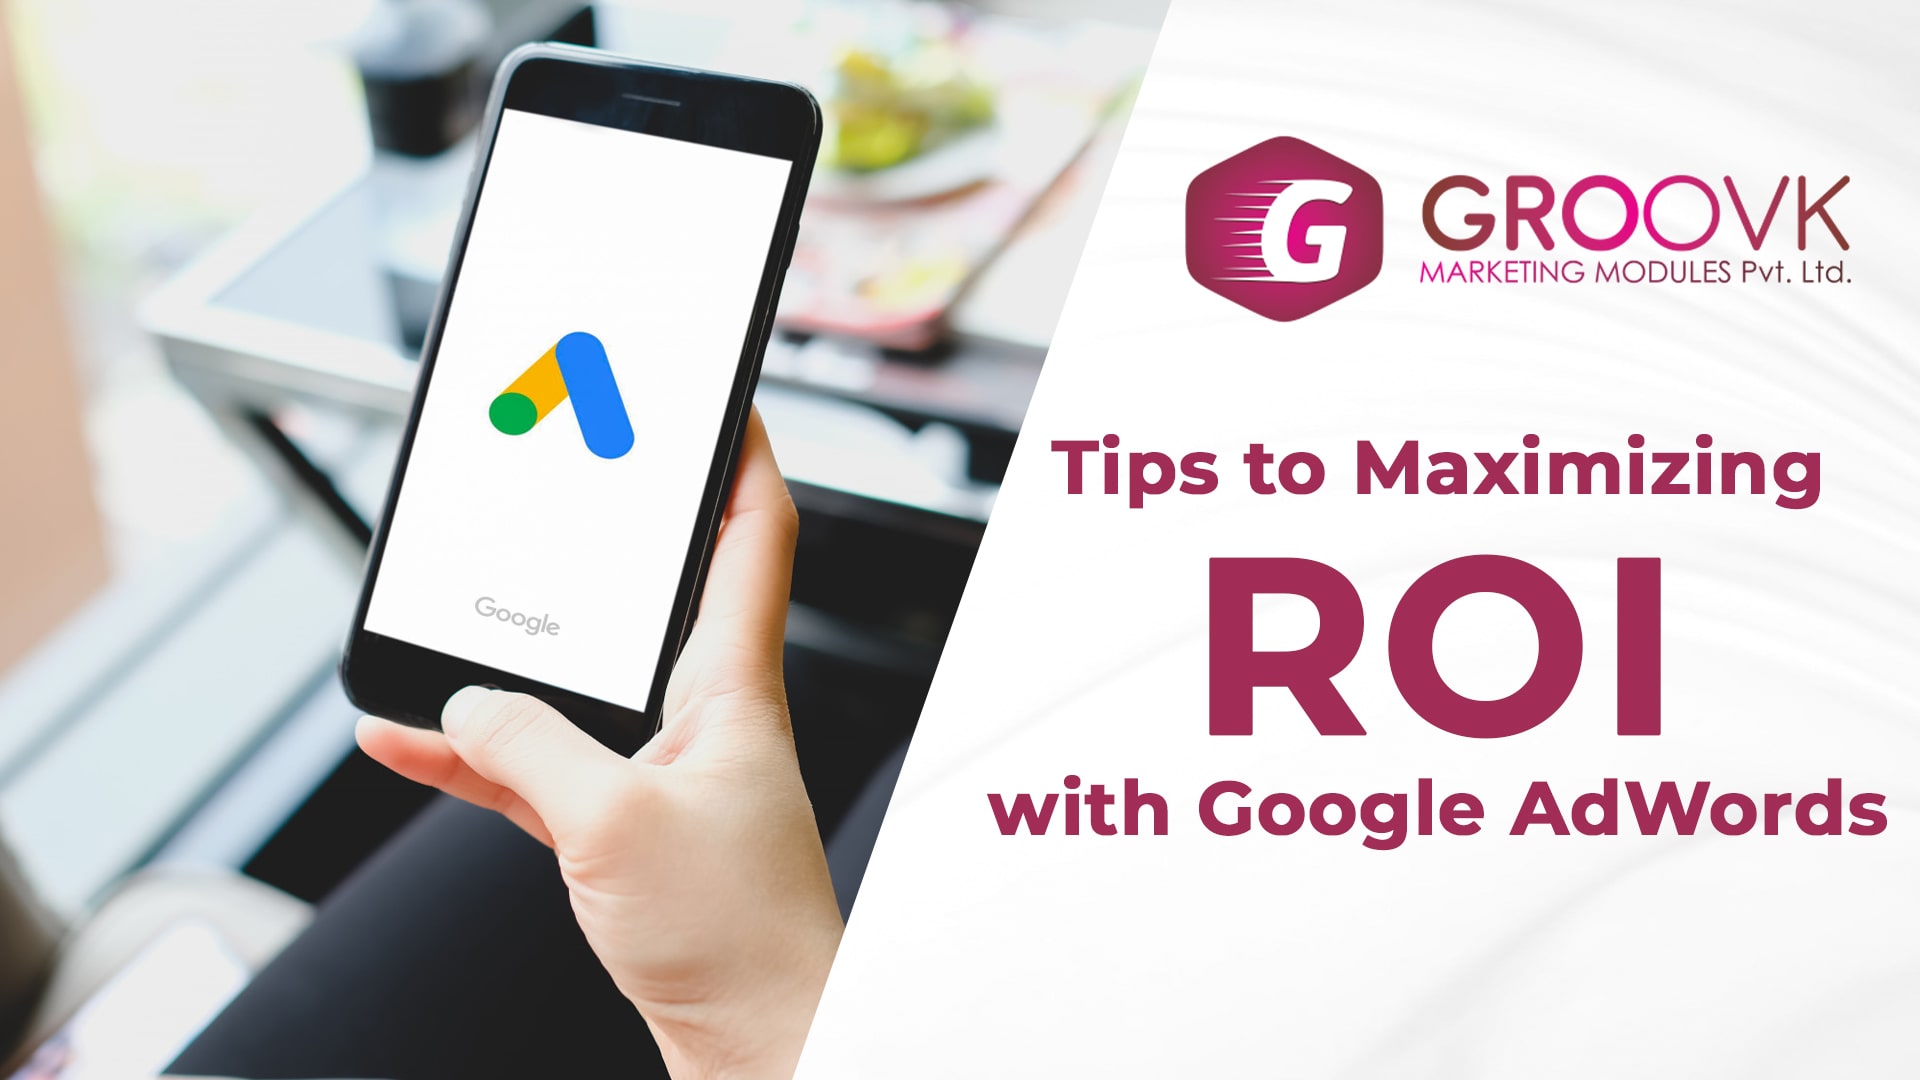 Tips to Maximizing ROI with Google AdWords
								